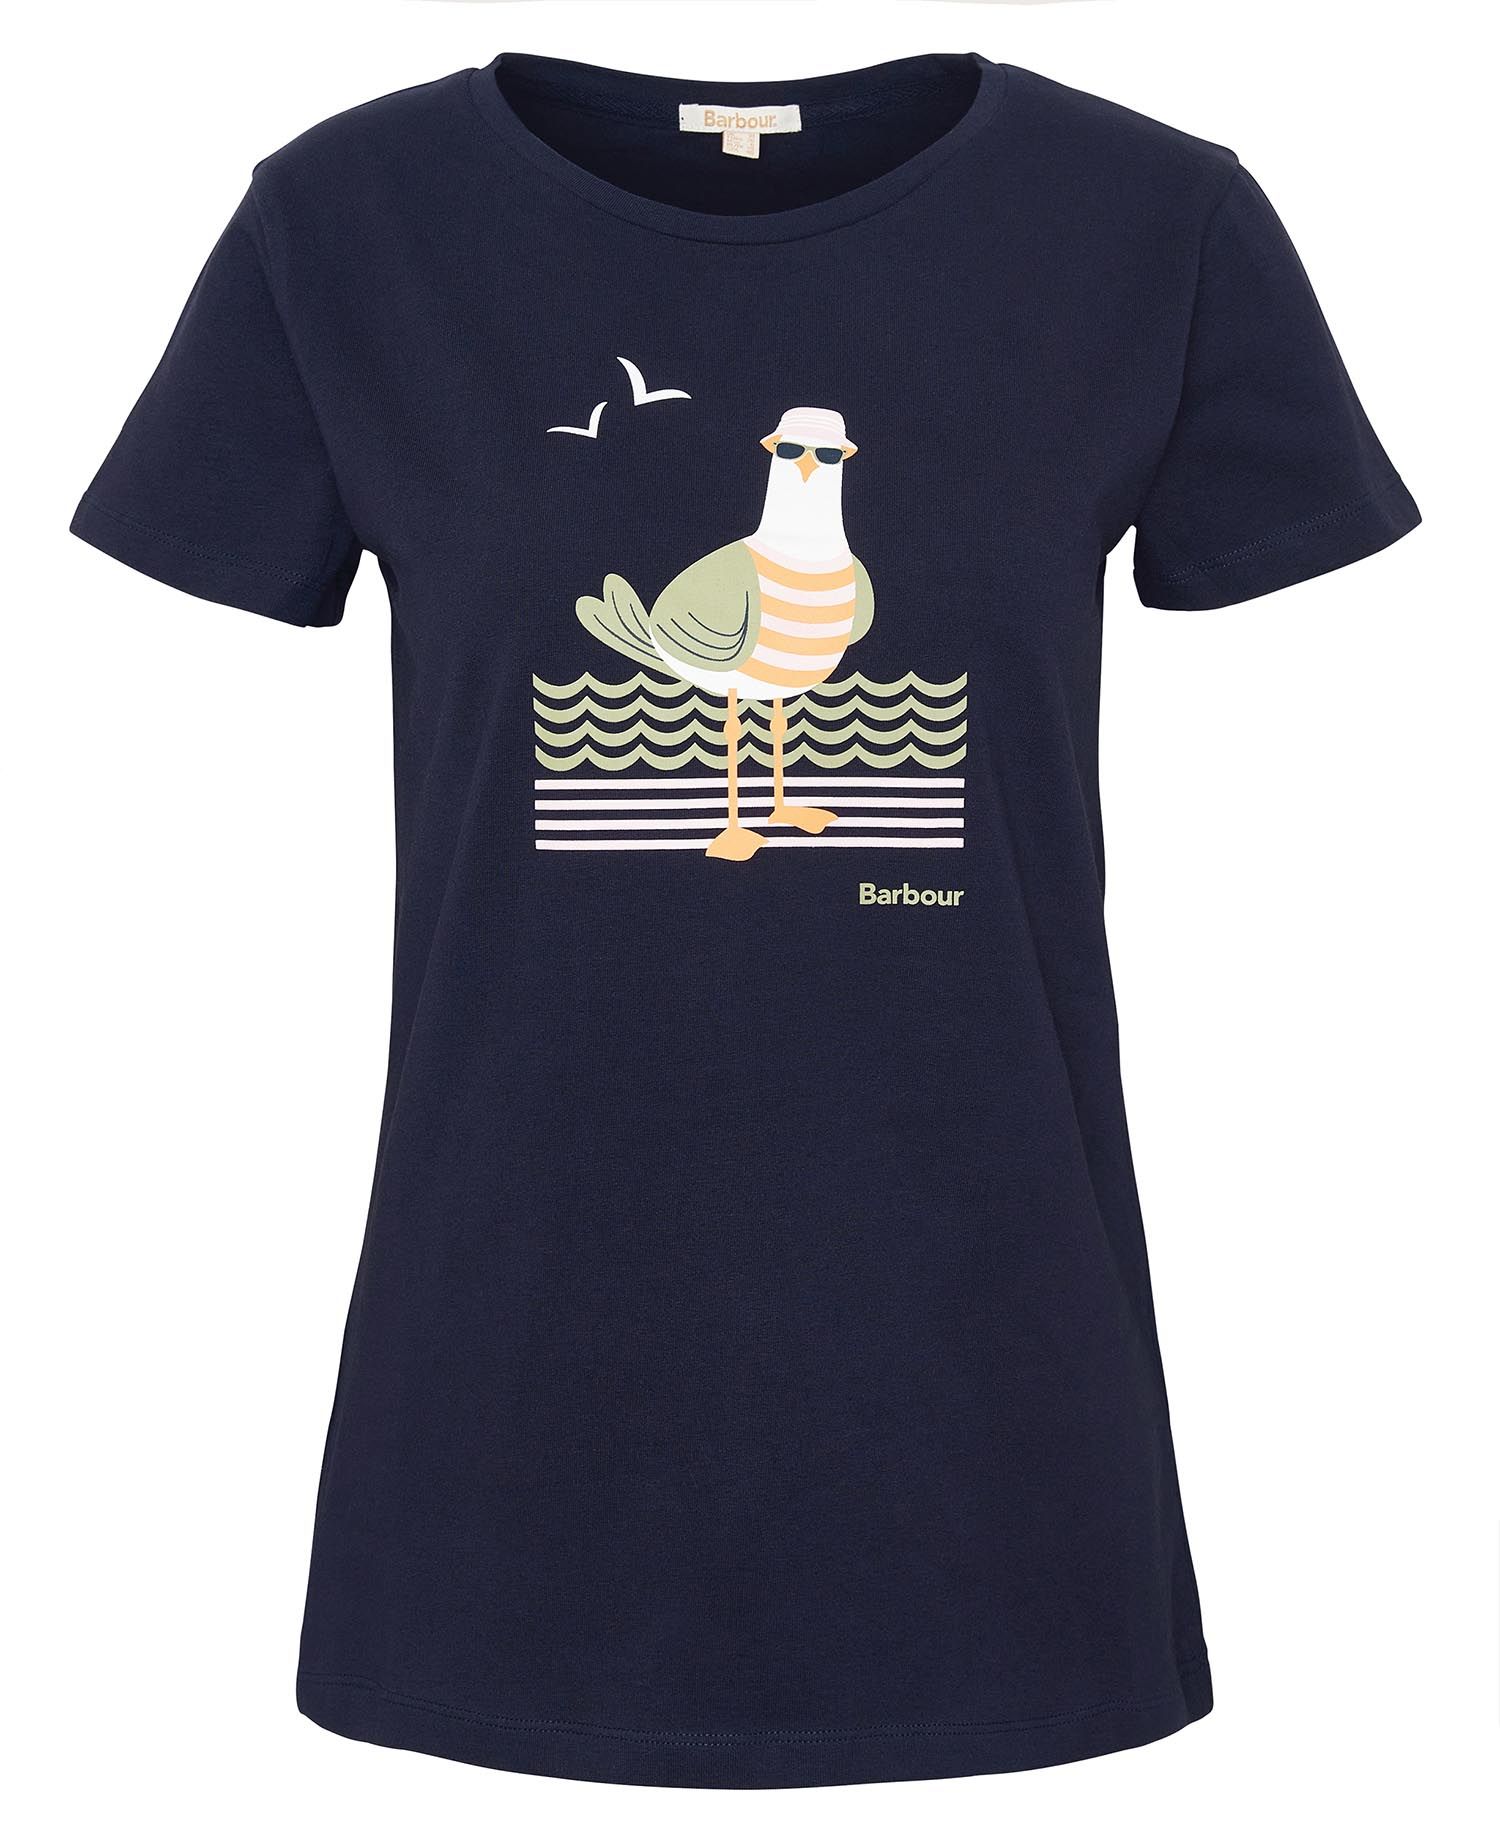 Barbour Merseyside T-Shirt - Navy